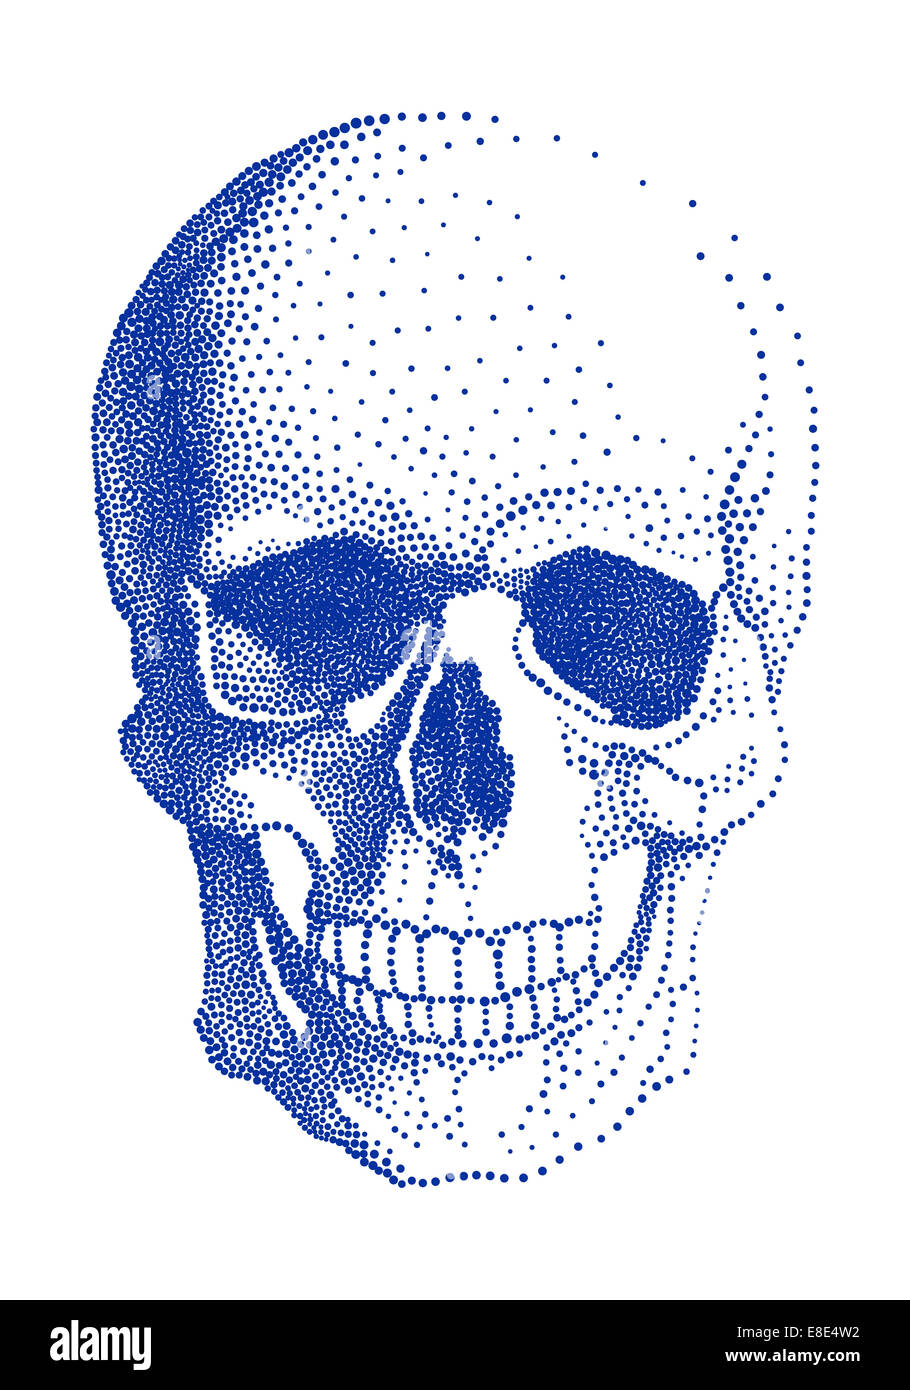 blue human skull illustration Stock Photo